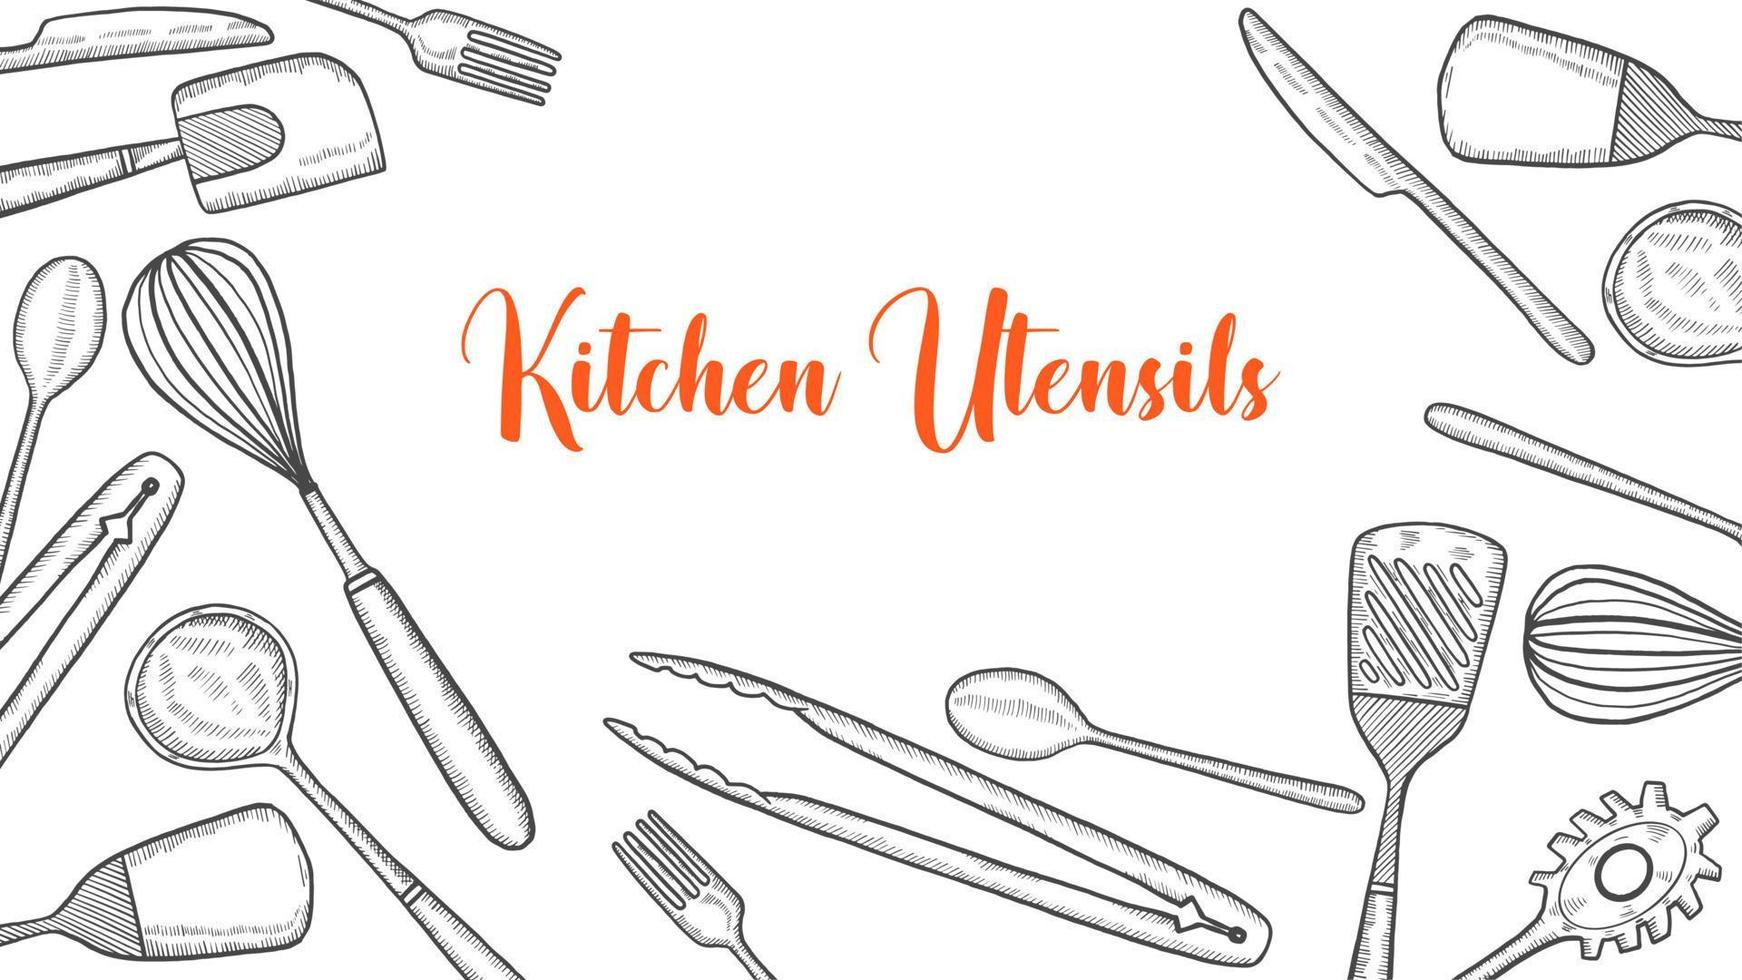 colección de utensilios de cocina con boceto dibujado a mano para póster de plantilla de banner de fondo vector